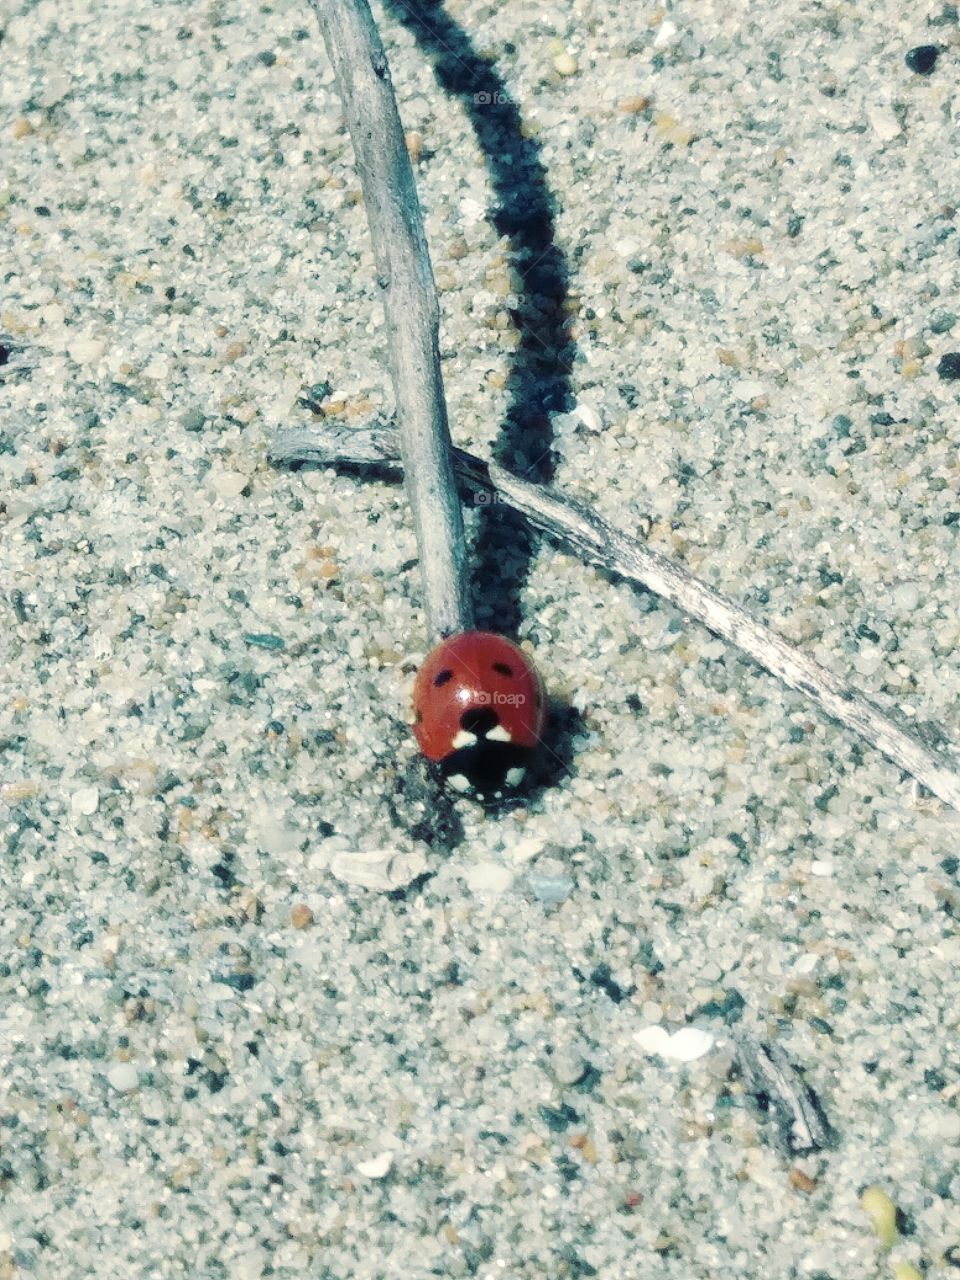 Ladybug on a Stick